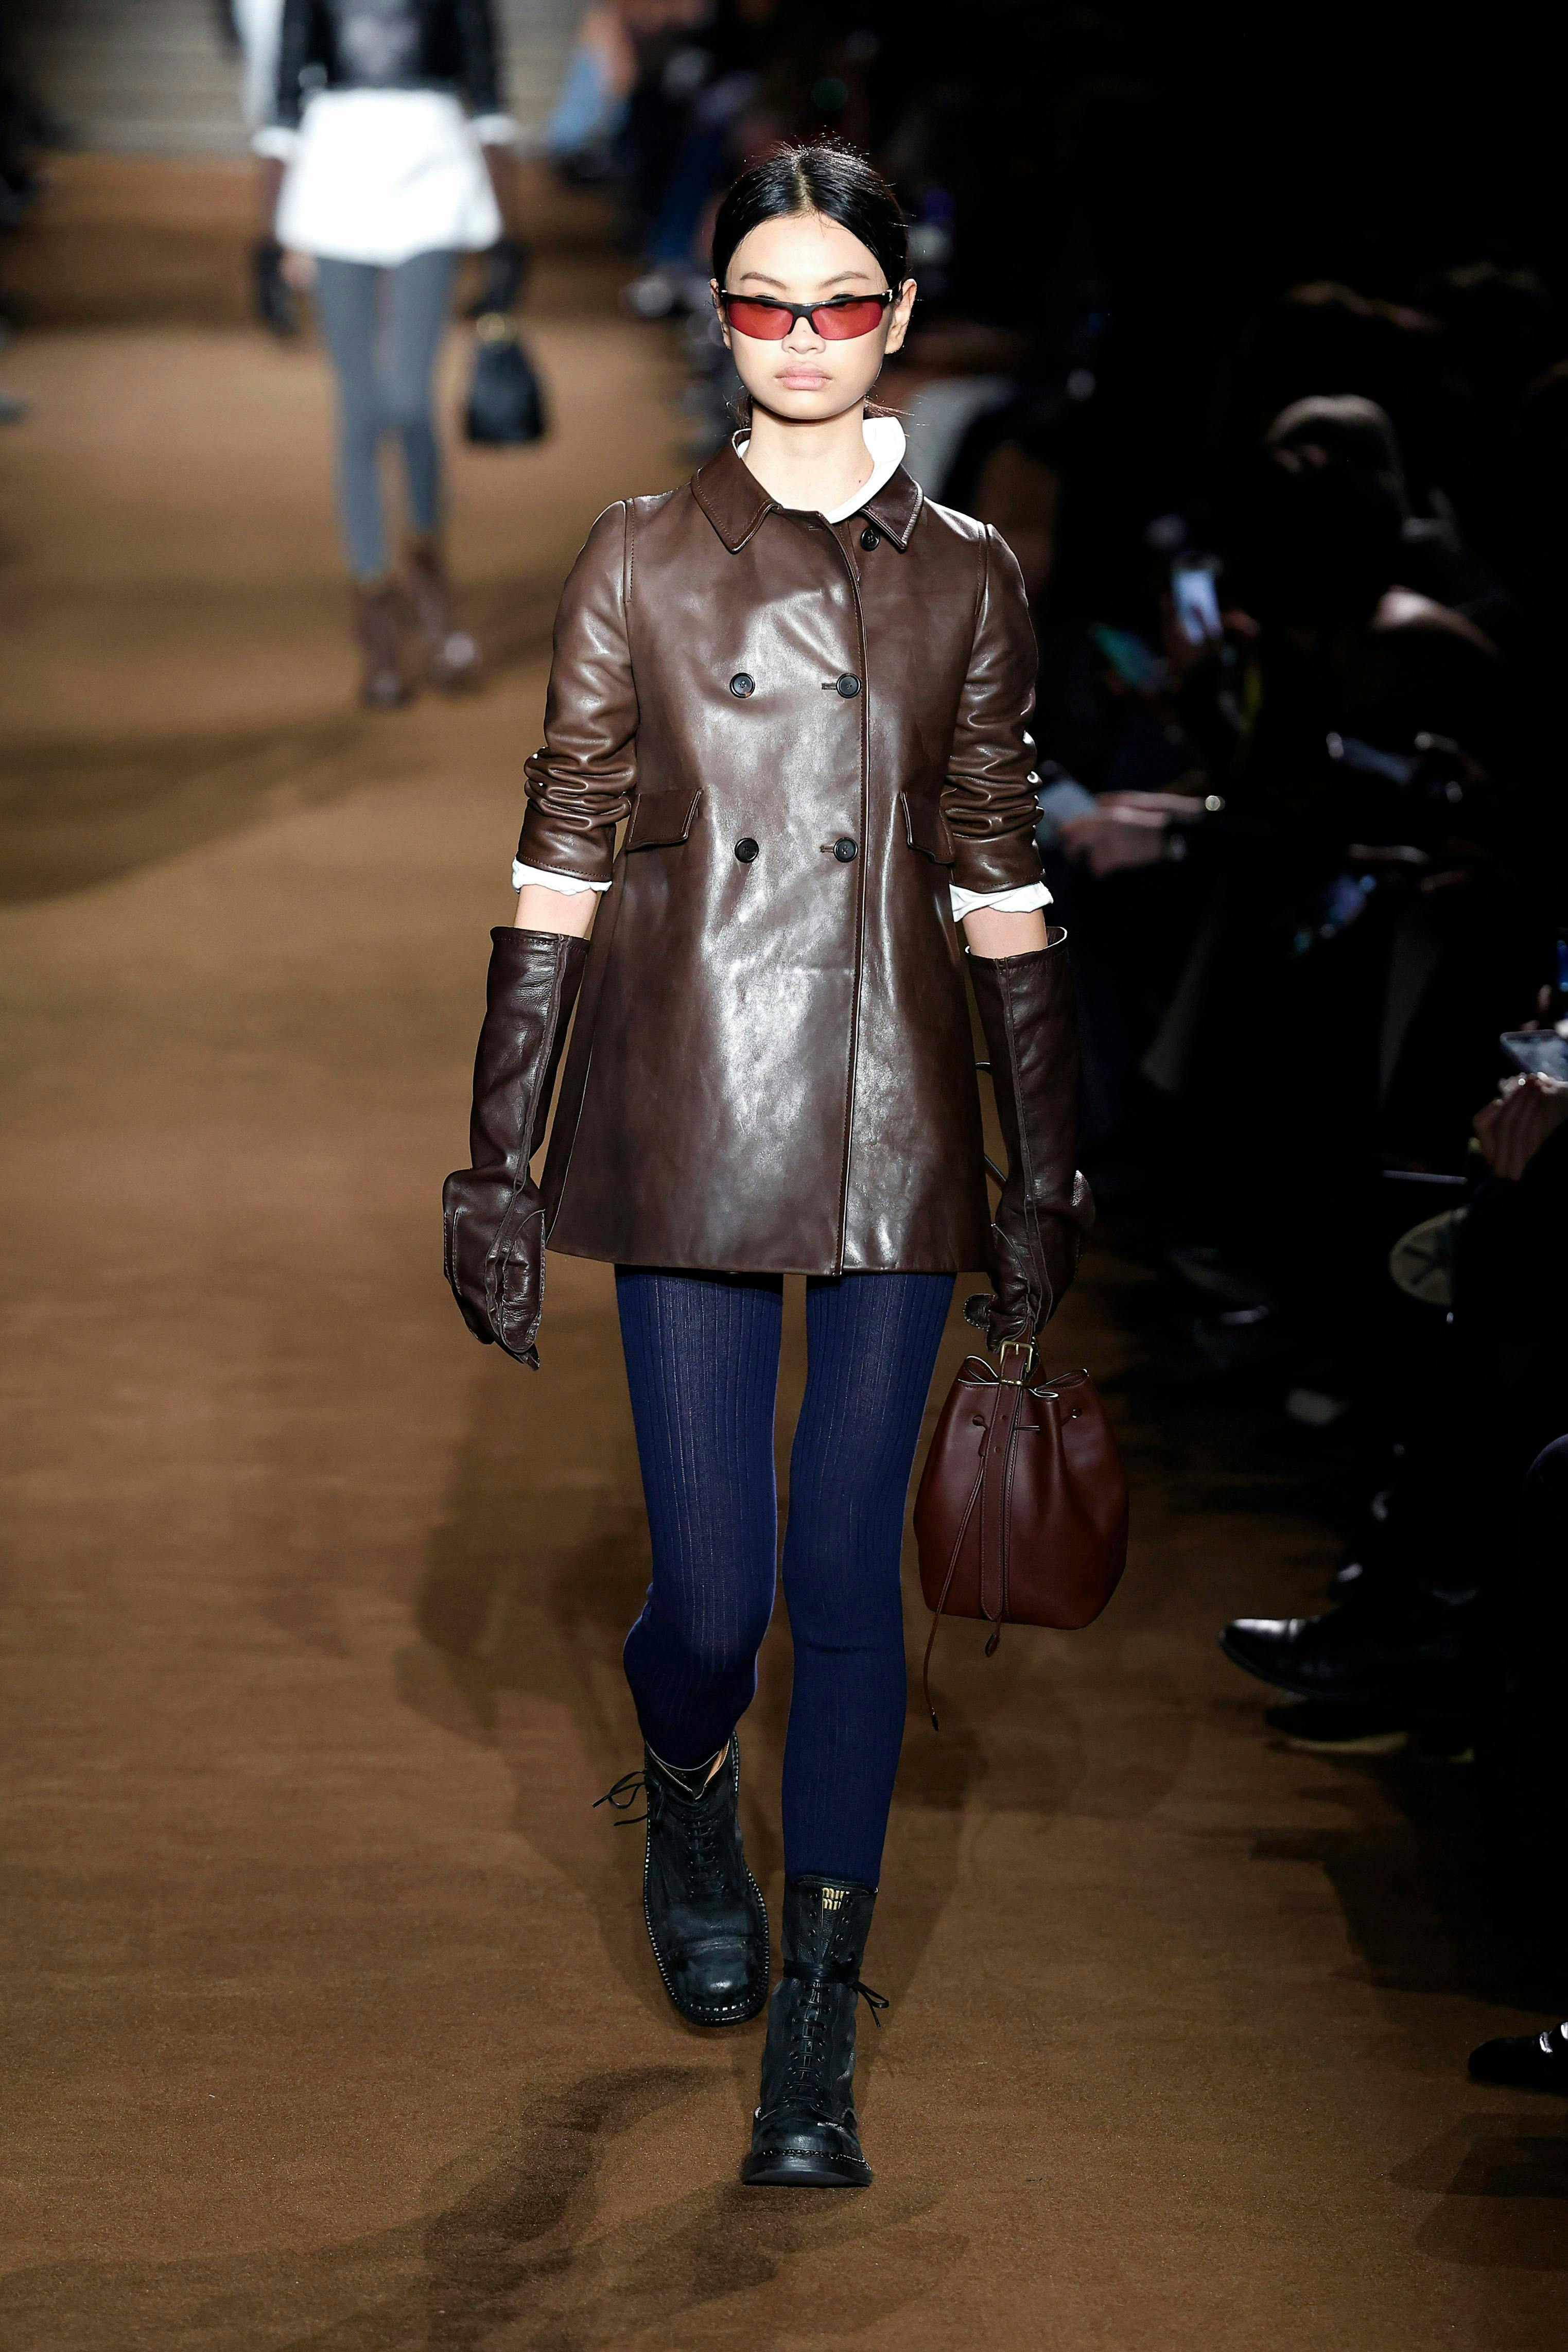 paris clothing coat jacket fashion person long sleeve handbag glove shoe jeans